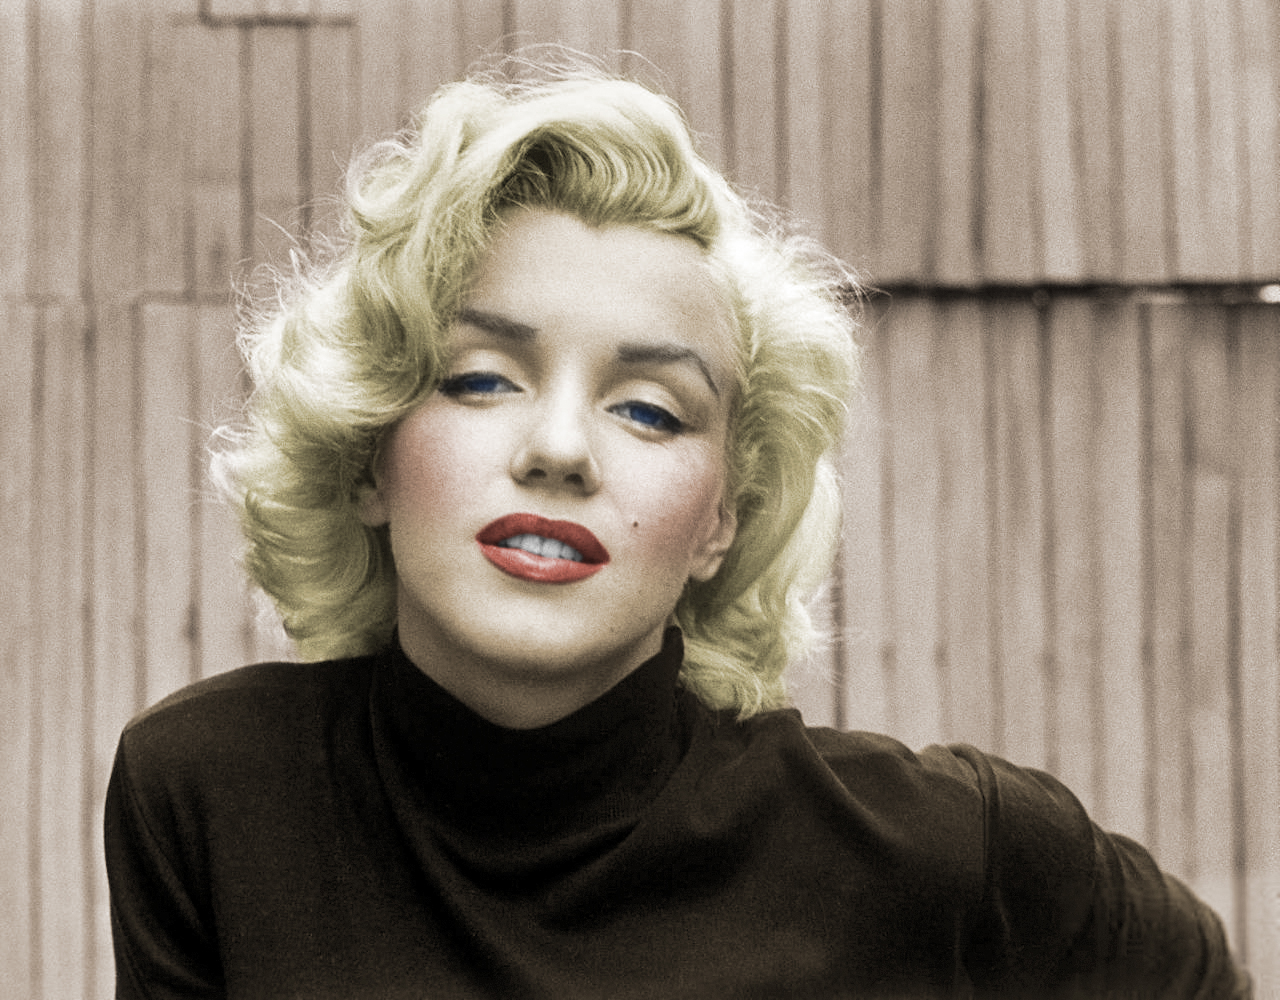 Marilyn Monroe Childhood Images Wallpaper, HD Celebrities 4K Wallpapers ...